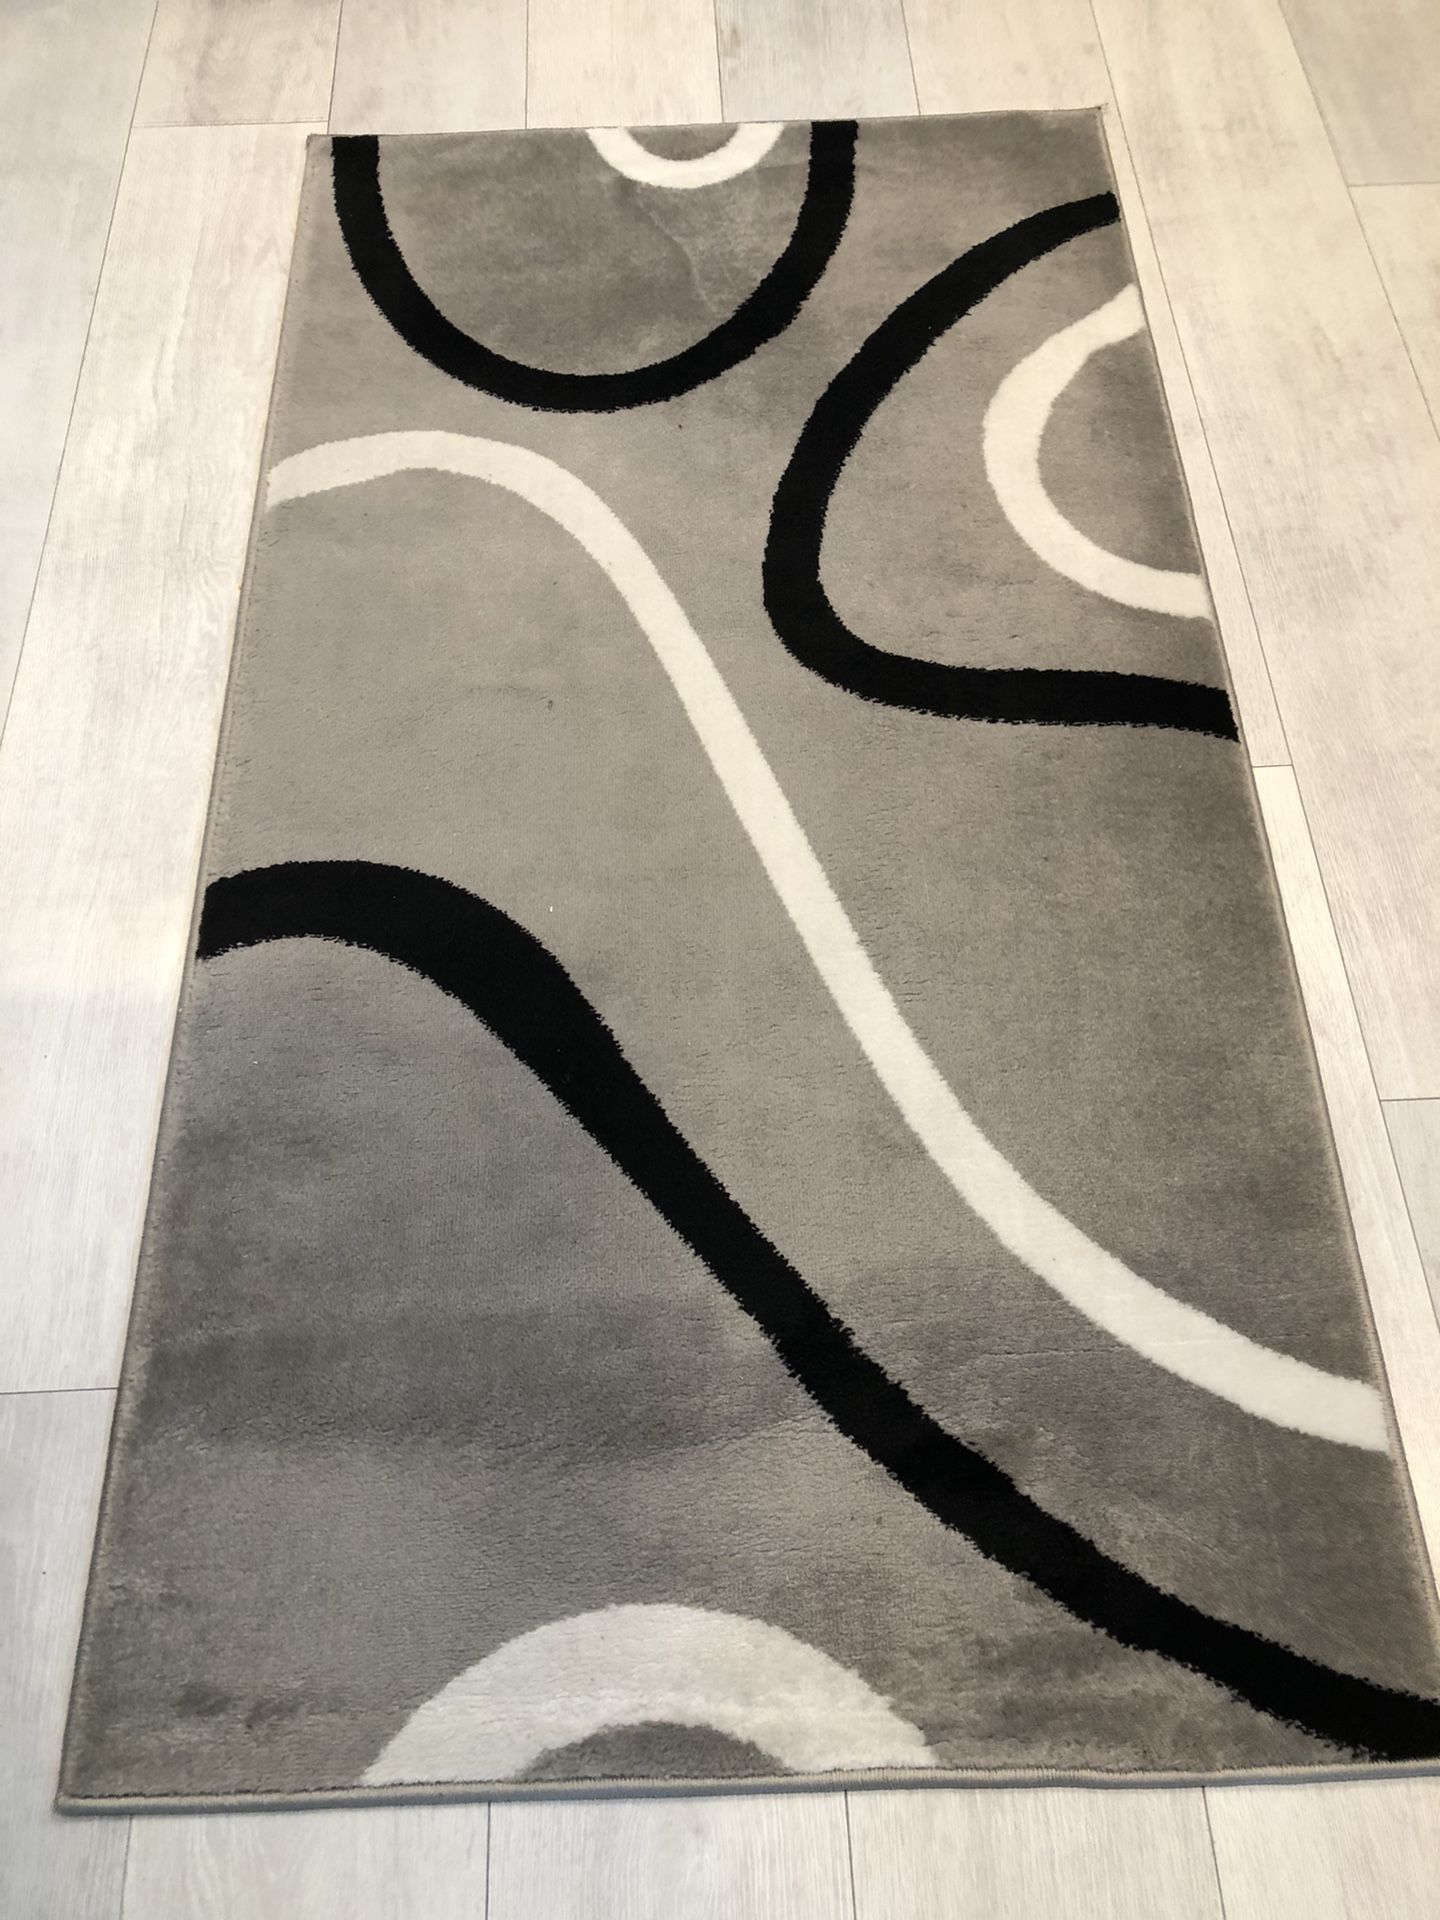 3’ x 5’ side area rug